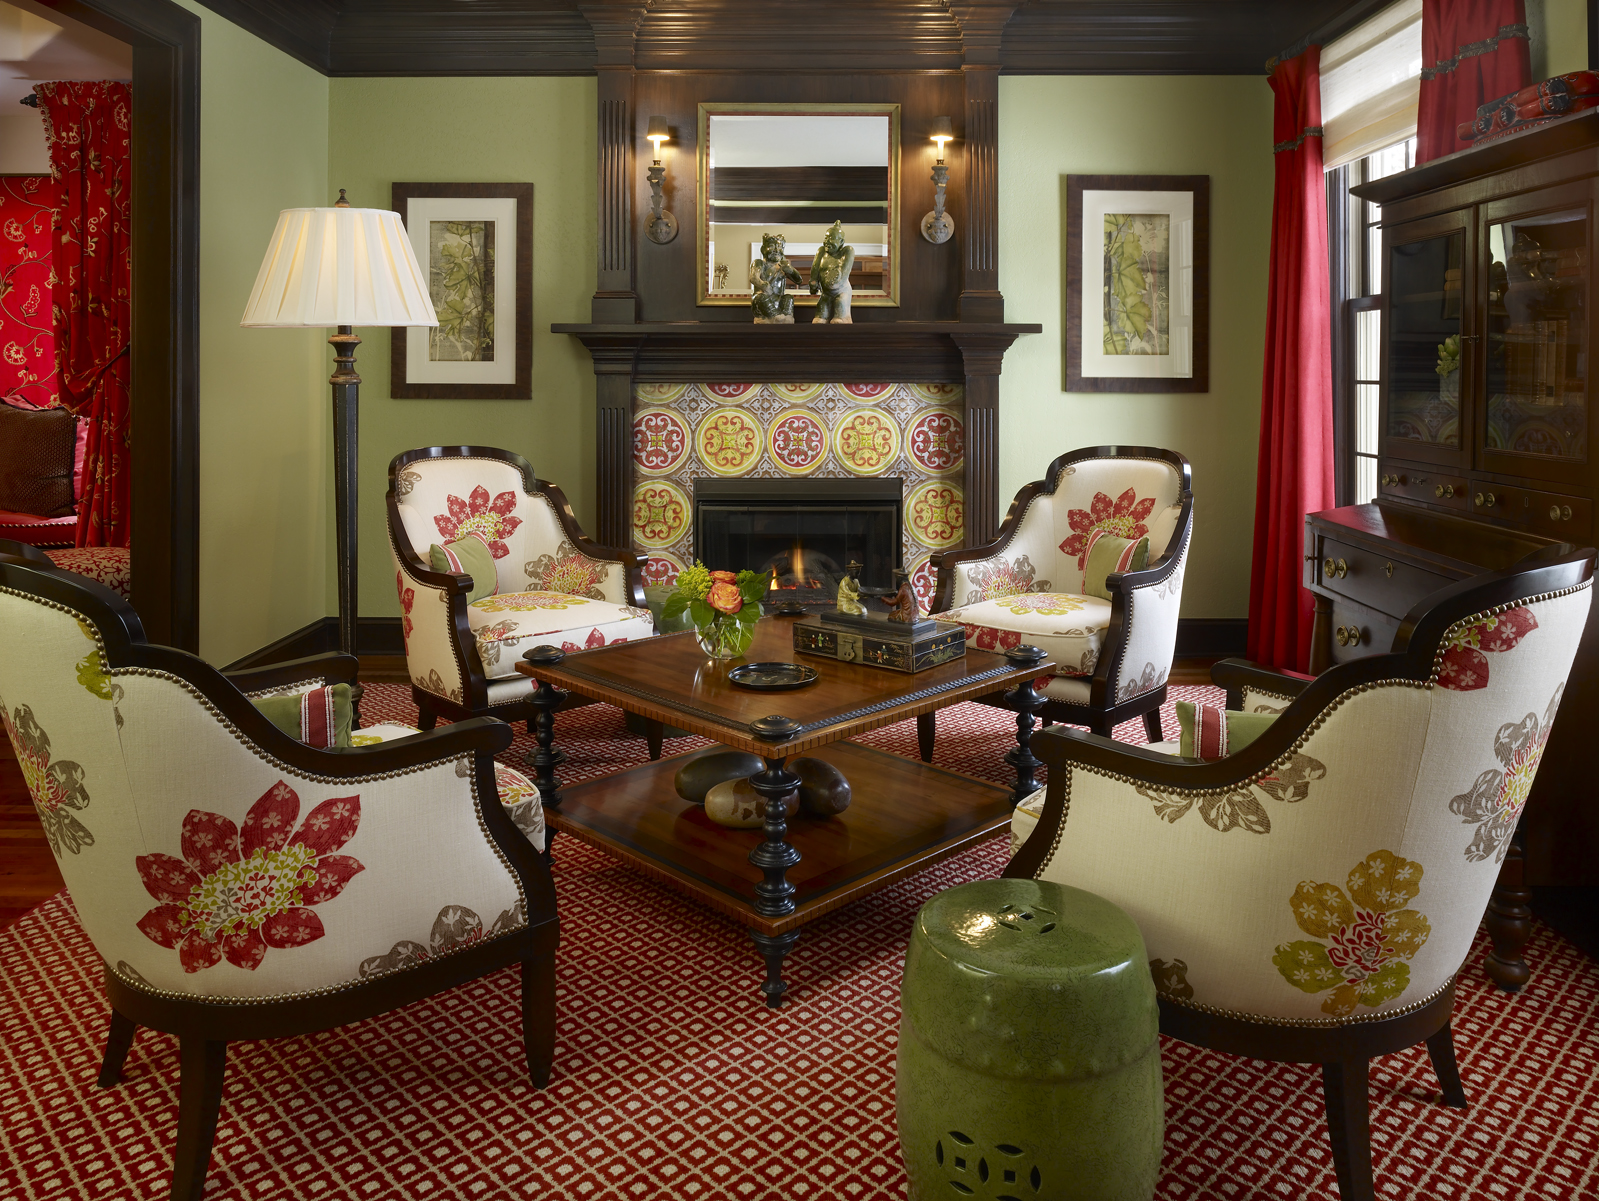 LEO Interiors Designing Dramatic Colorful Interiors For Clients